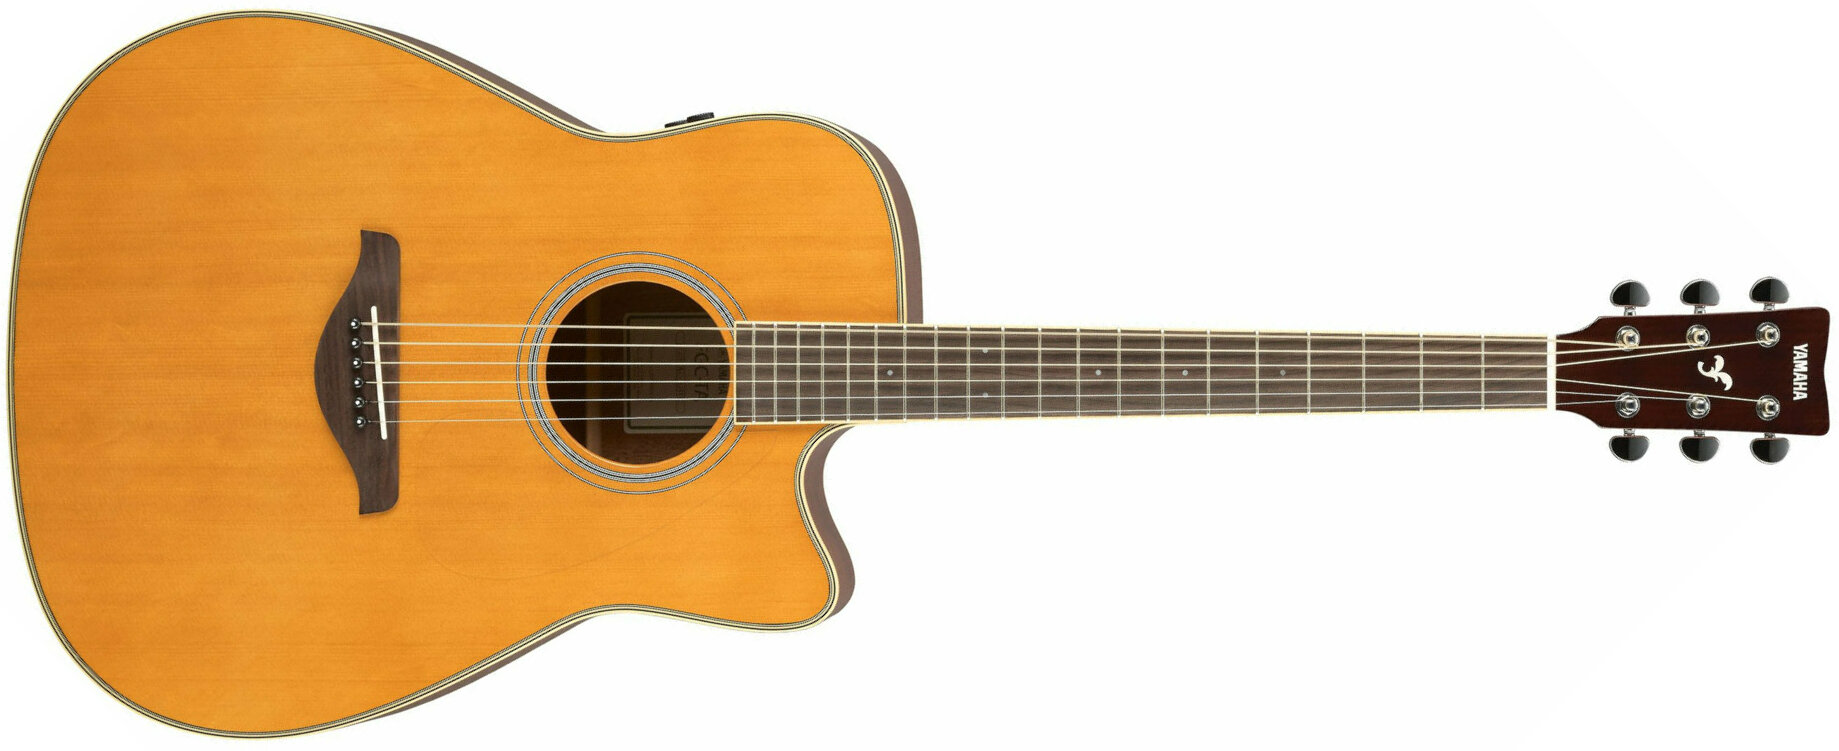 Yamaha Fgc-ta Transacoustic Cutaway Epicea Acajou Rw - Vintage Tint - Acoustic guitar & electro - Main picture